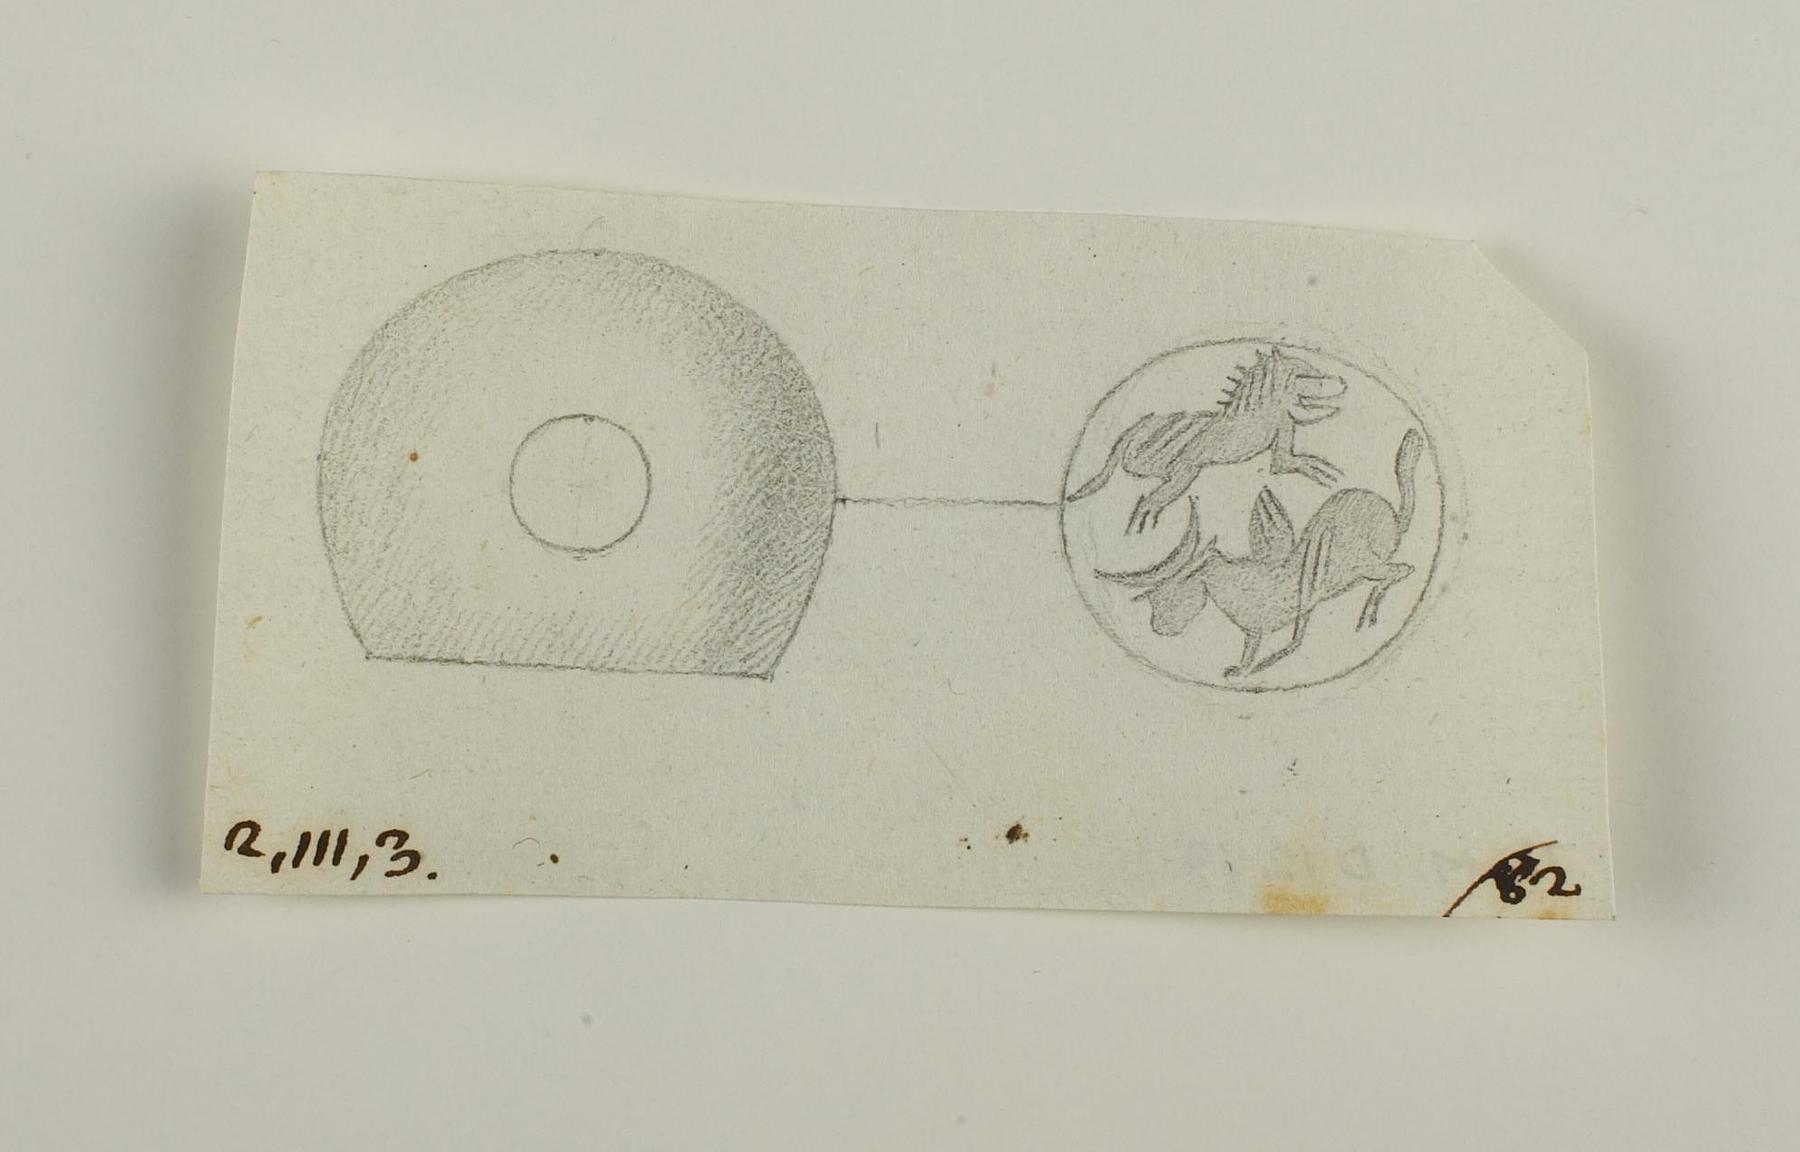 Seal stone, spherical, D1299